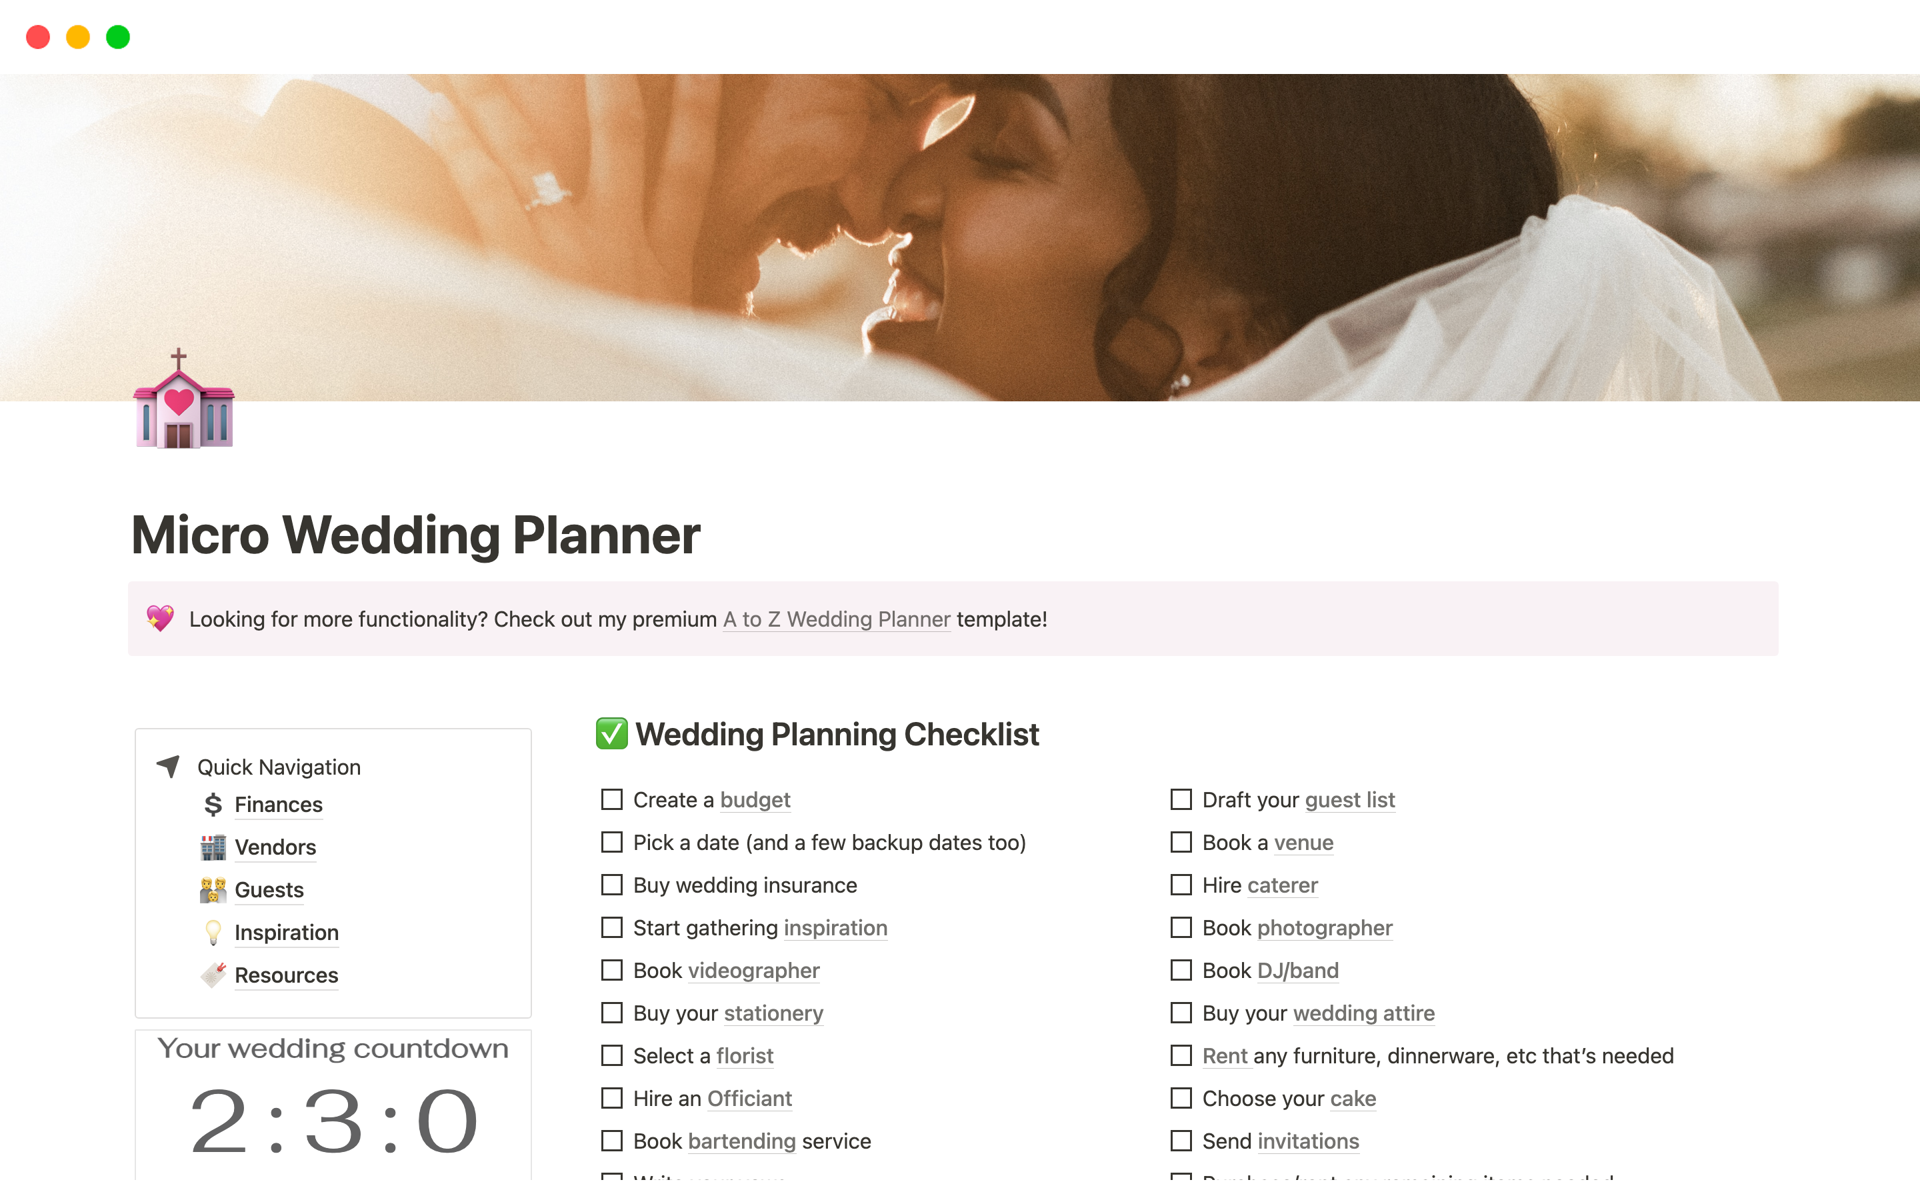 Wedding Planner Service ad Template